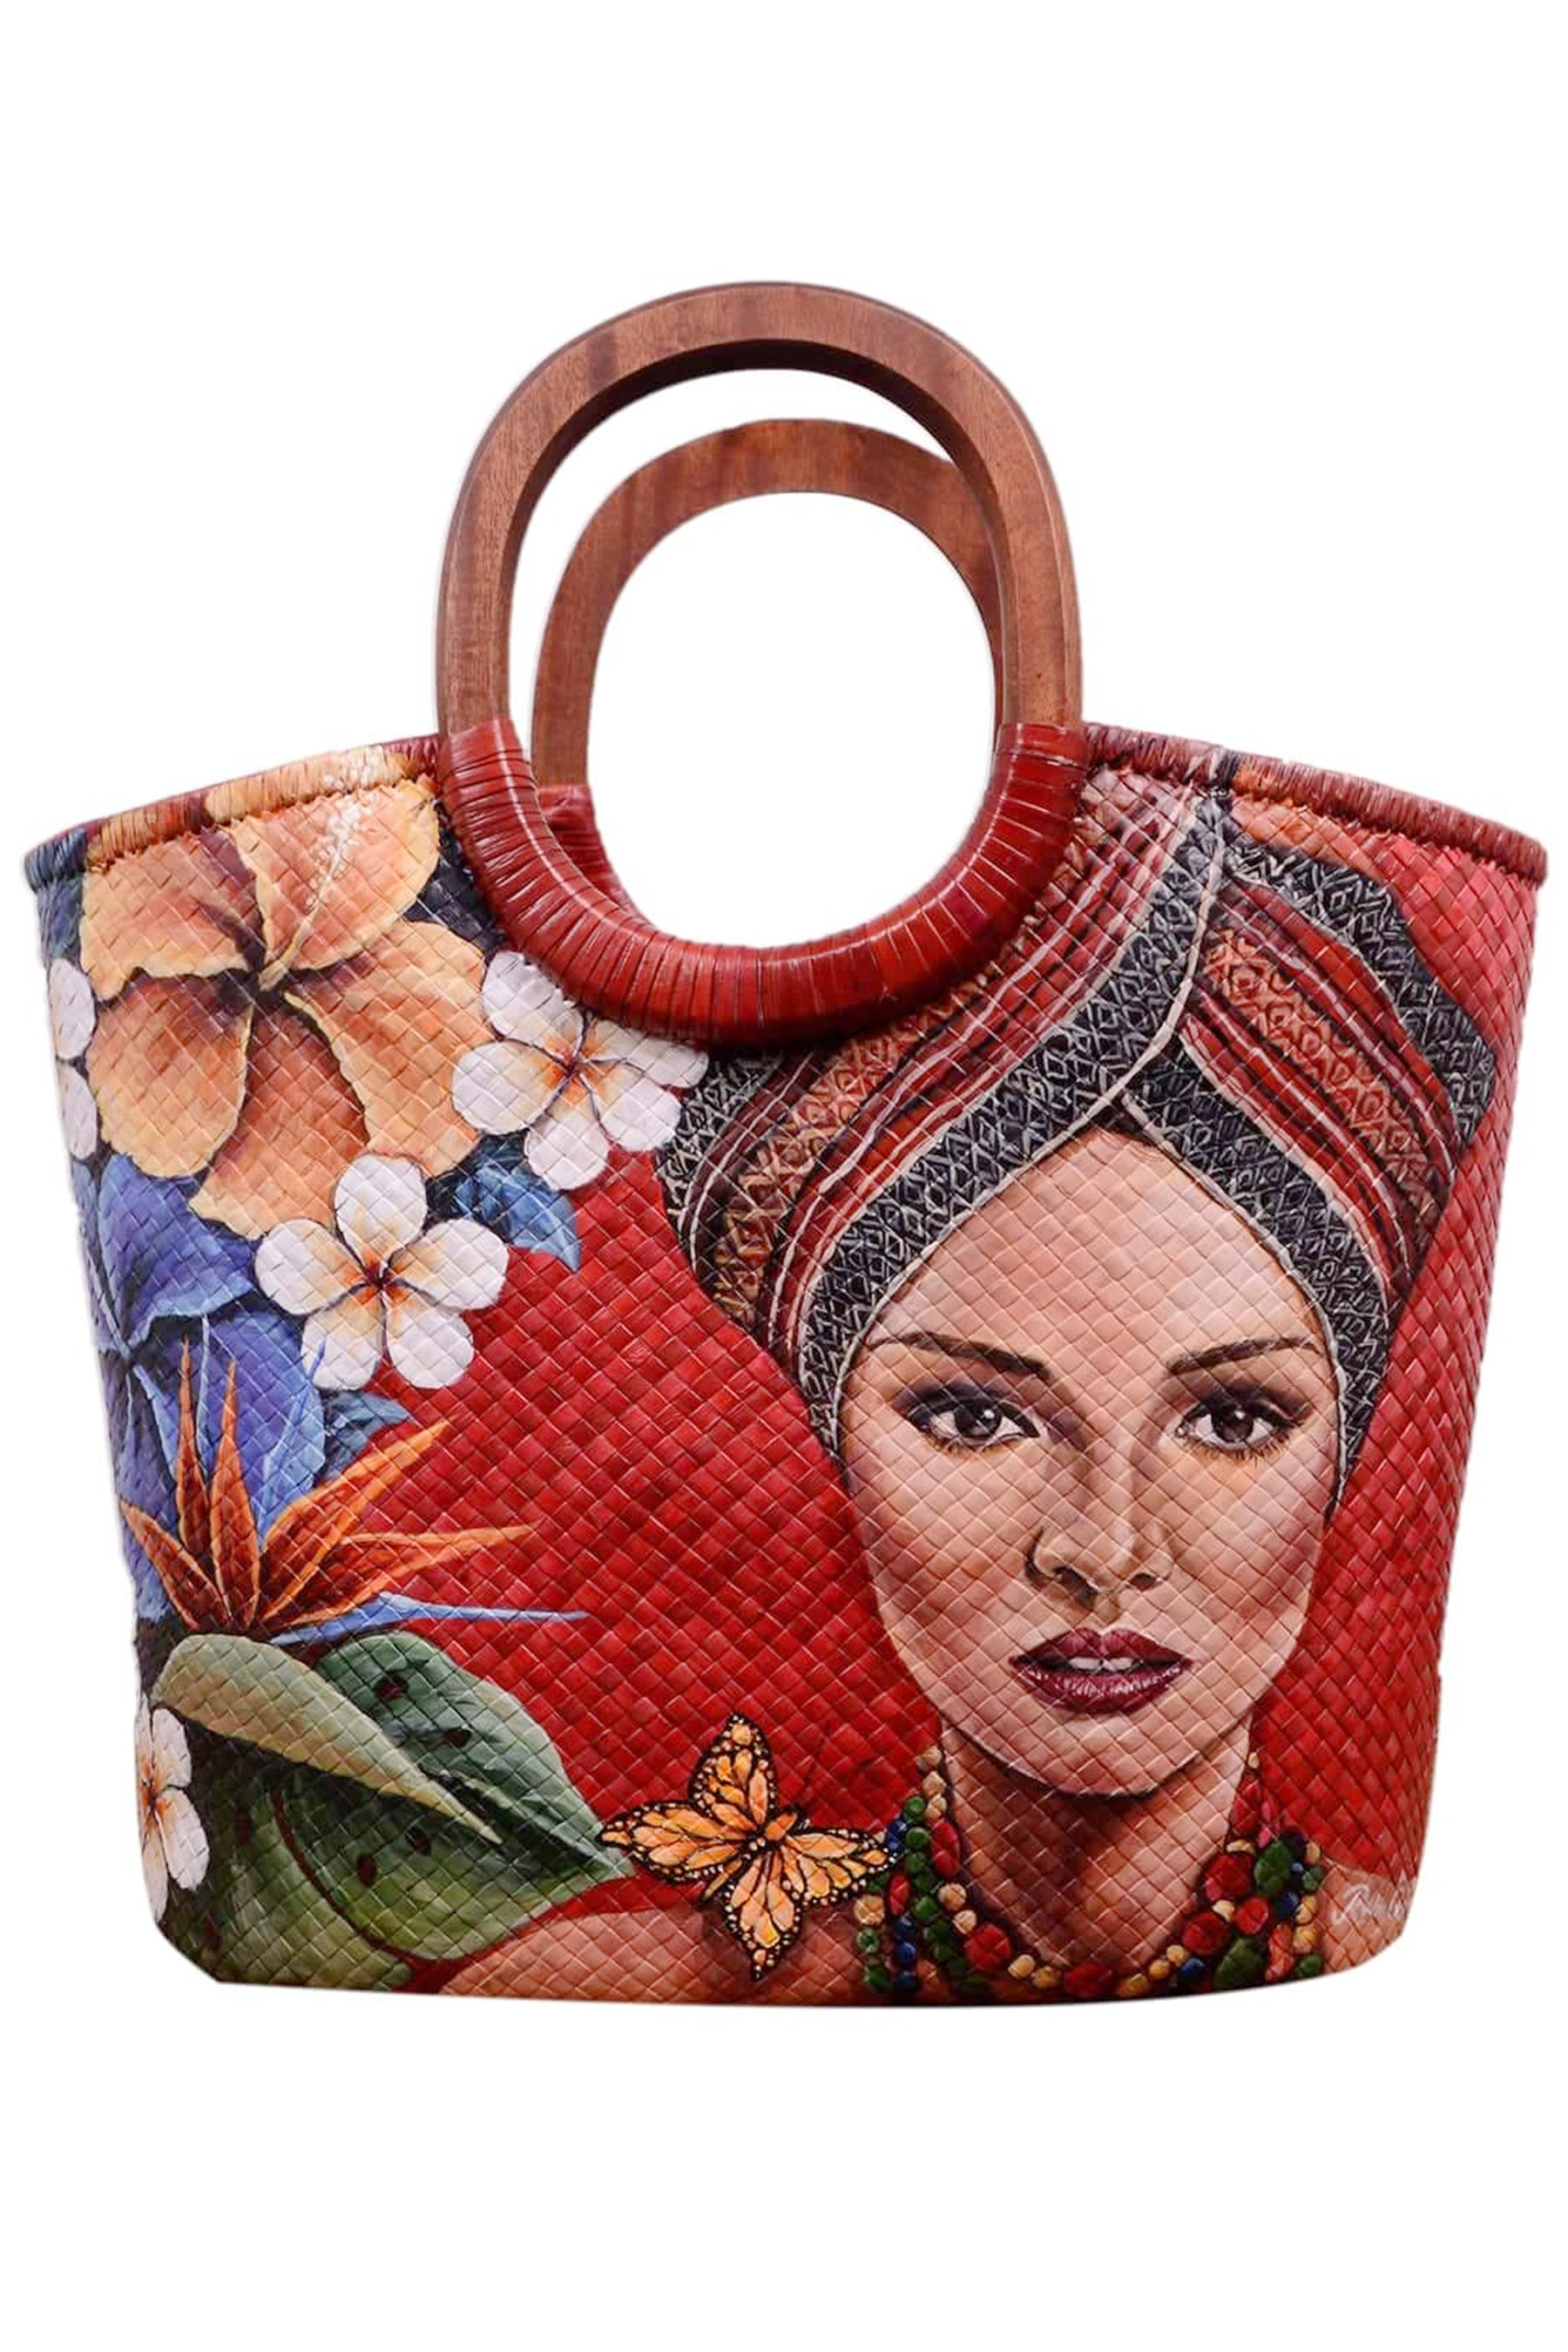 Handmade cloth bag patterns - Art & Craft Ideas | Bag pattern, Cloth bags,  Tote bag pattern